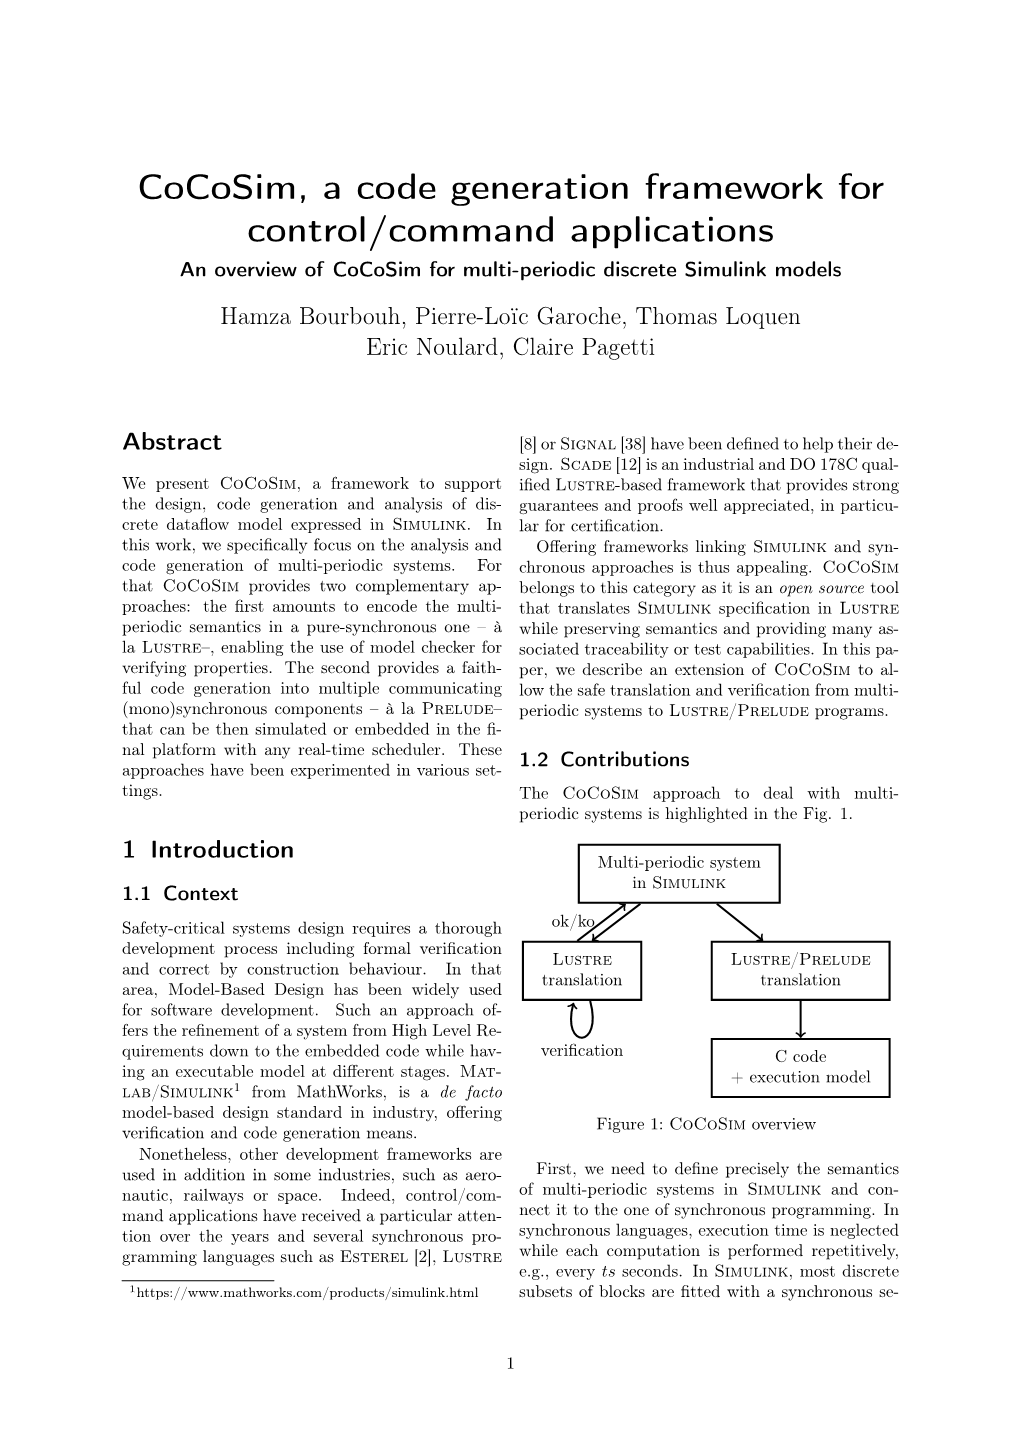 Cocosim, a Code Generation Framework for Control/Command